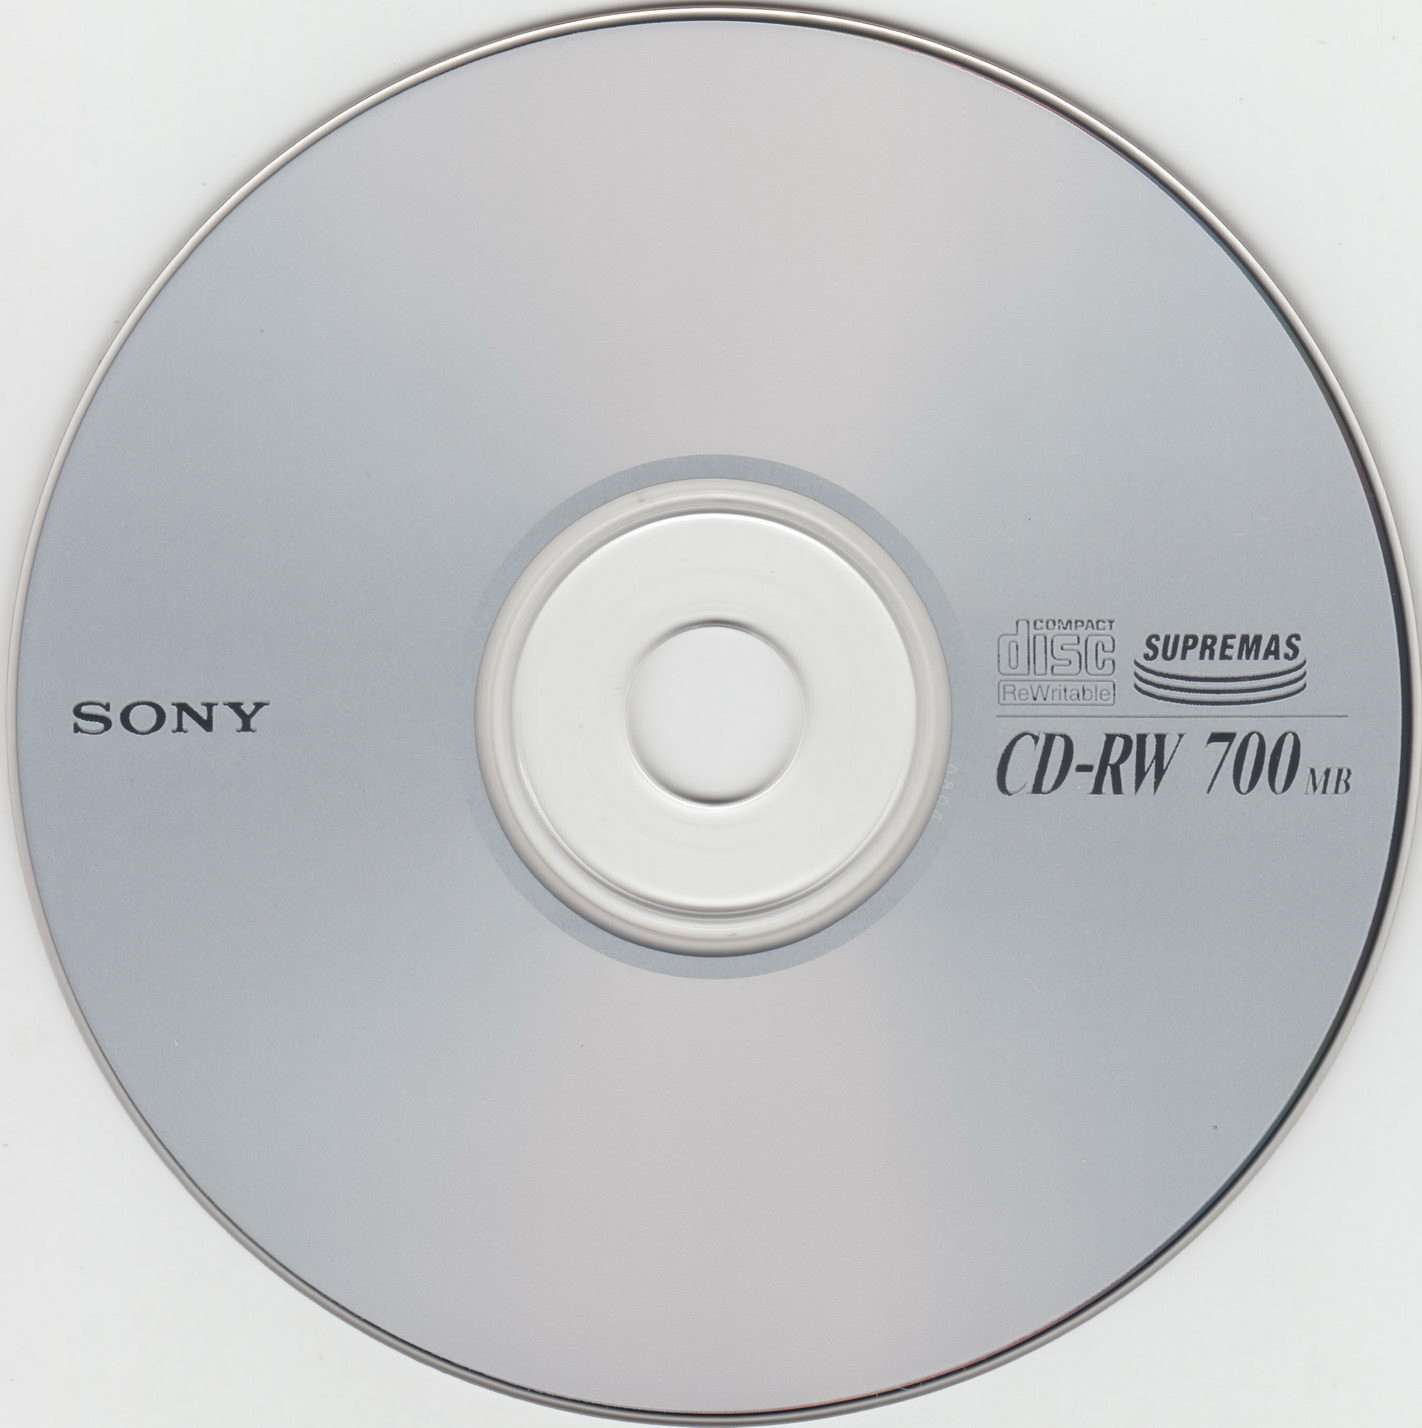 Диск Sony CD-RW 700 4x10x slim 80min Supremas